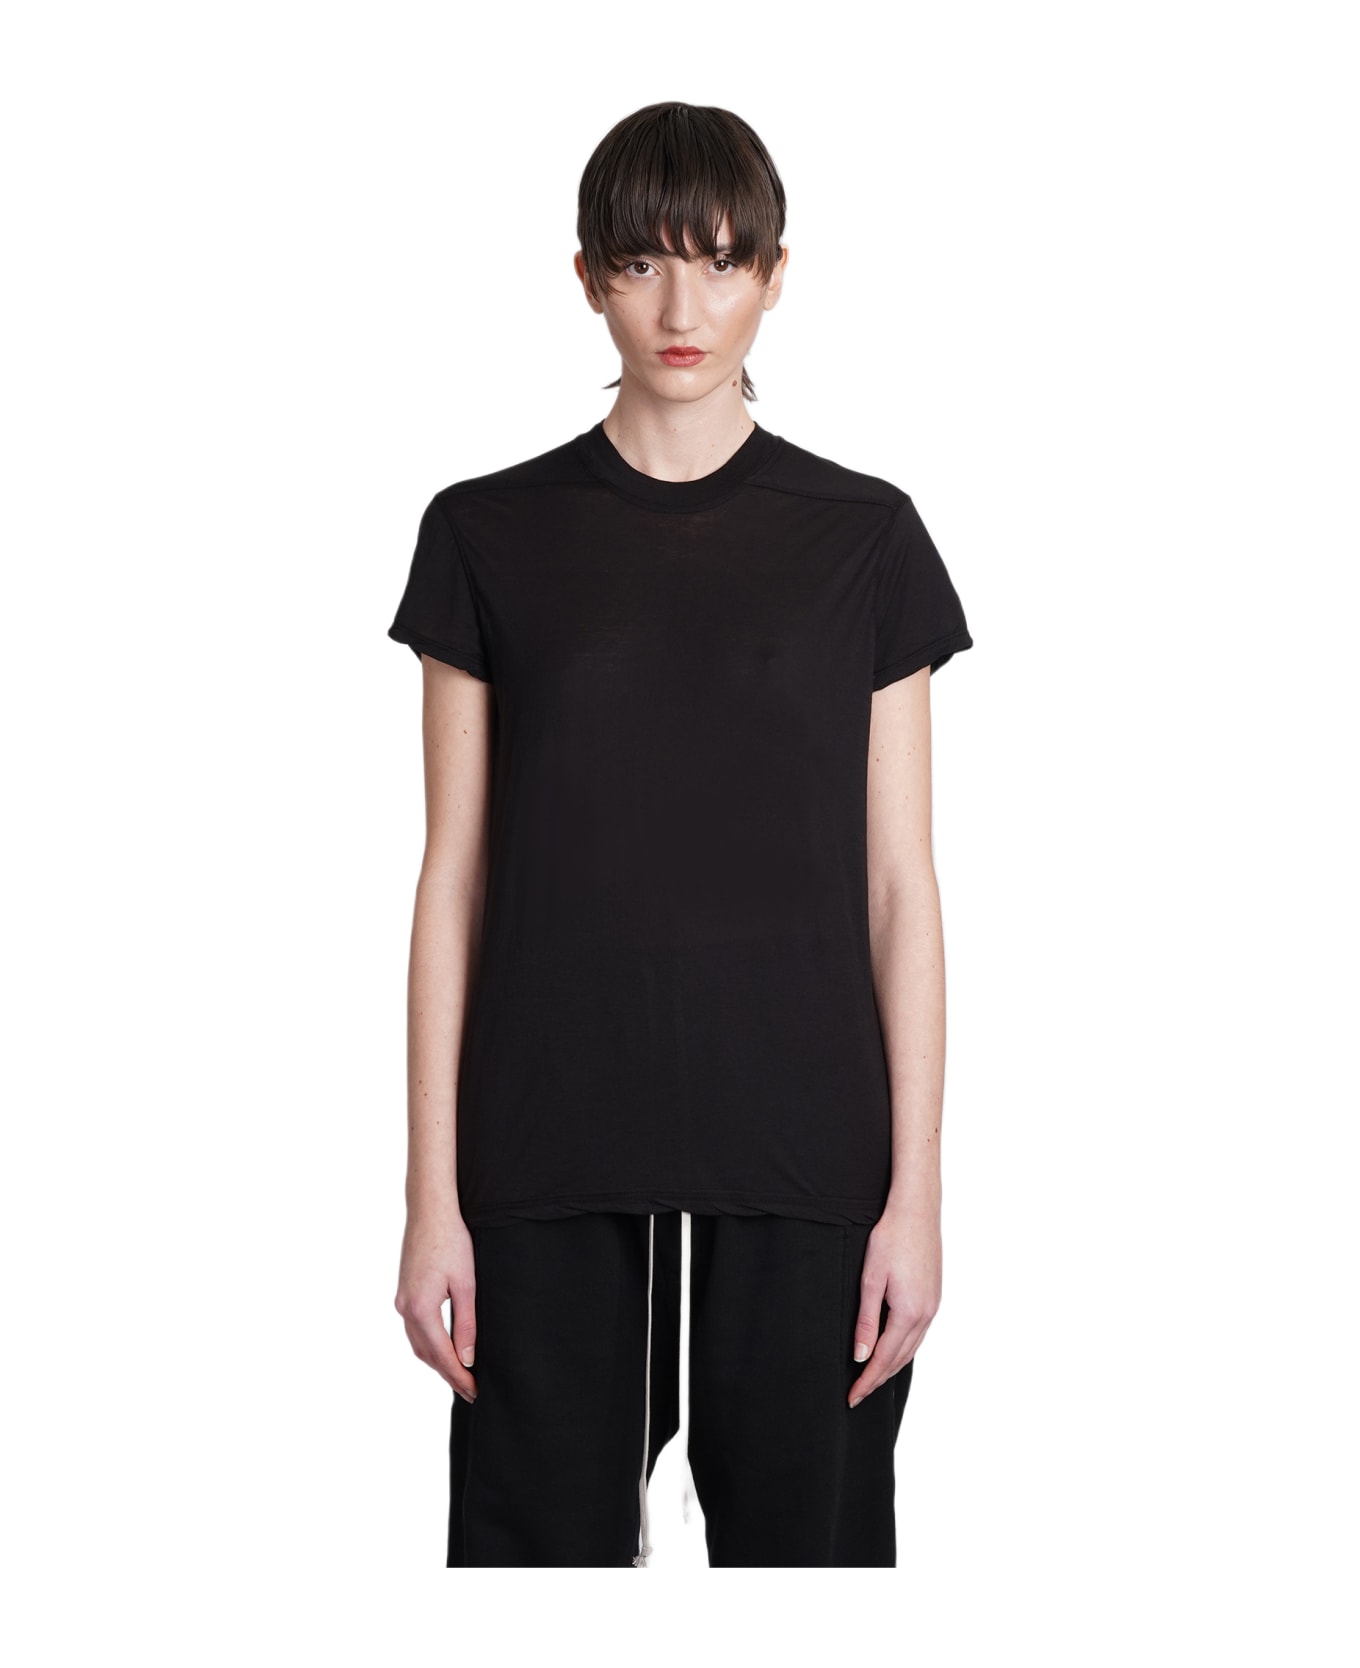 DRKSHDW Small Level T T-shirt In Black Cotton - black Tシャツ